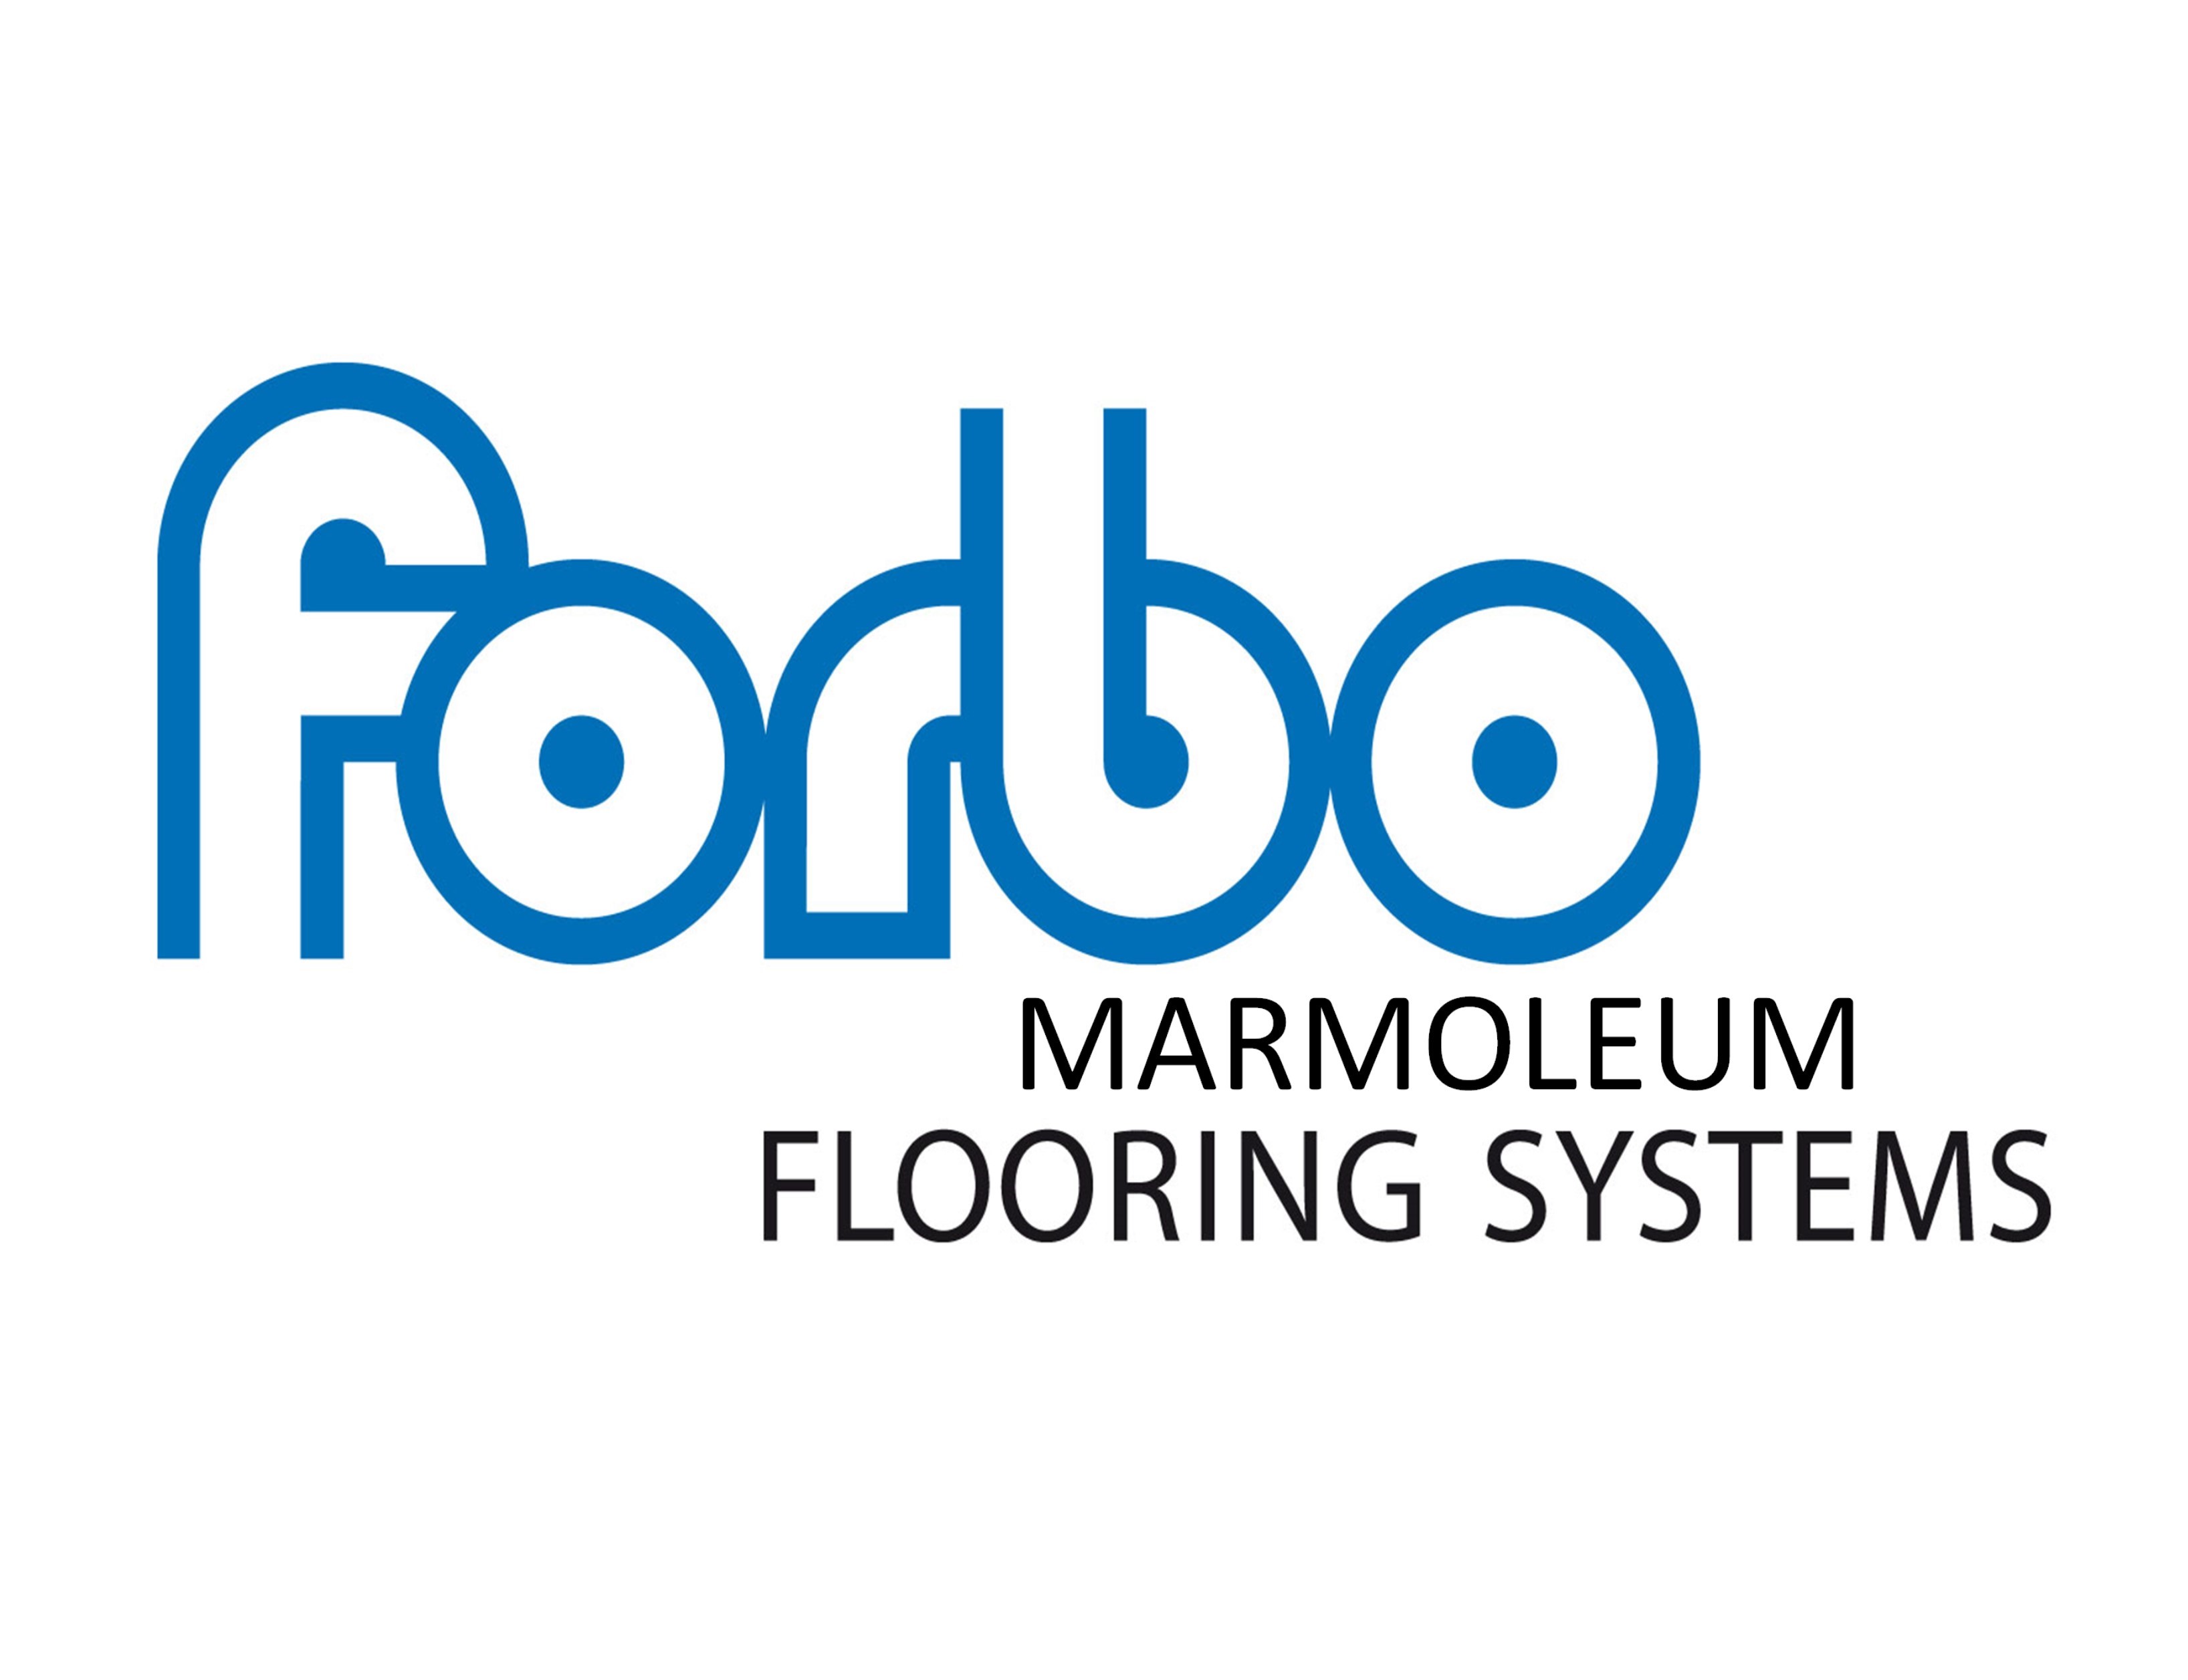 Forbo Marmoleum Training